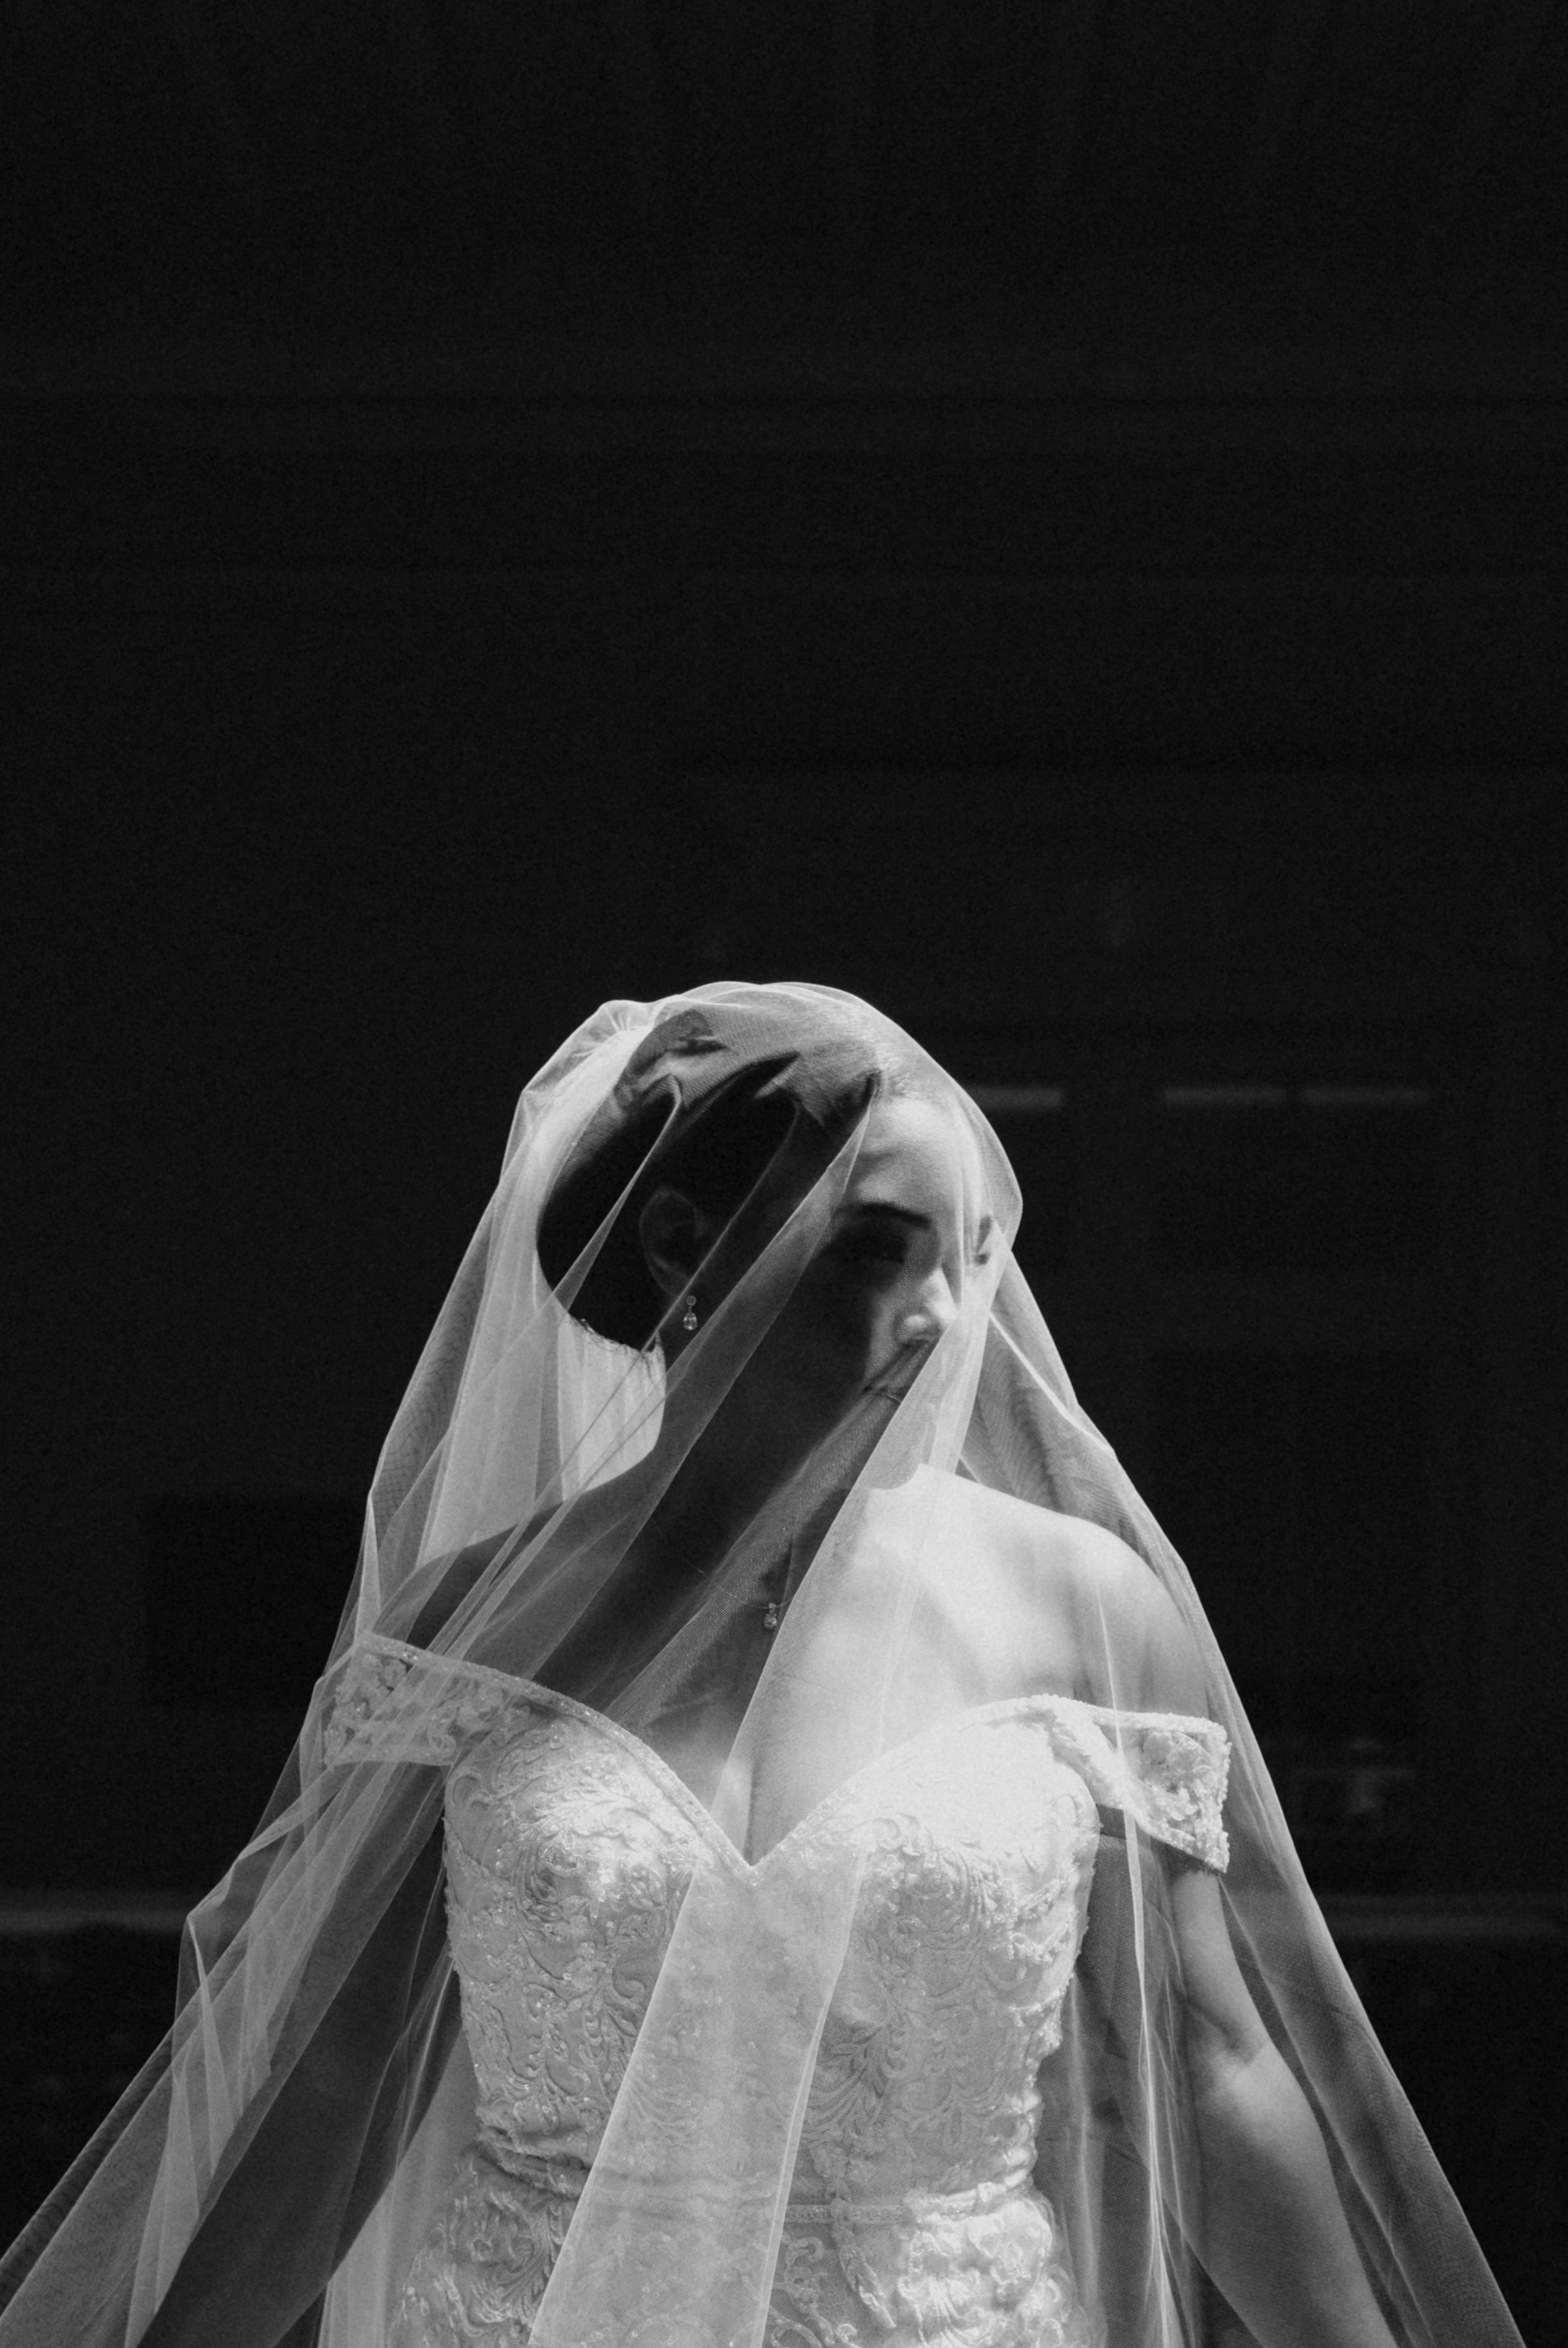 Wedding dress and veil